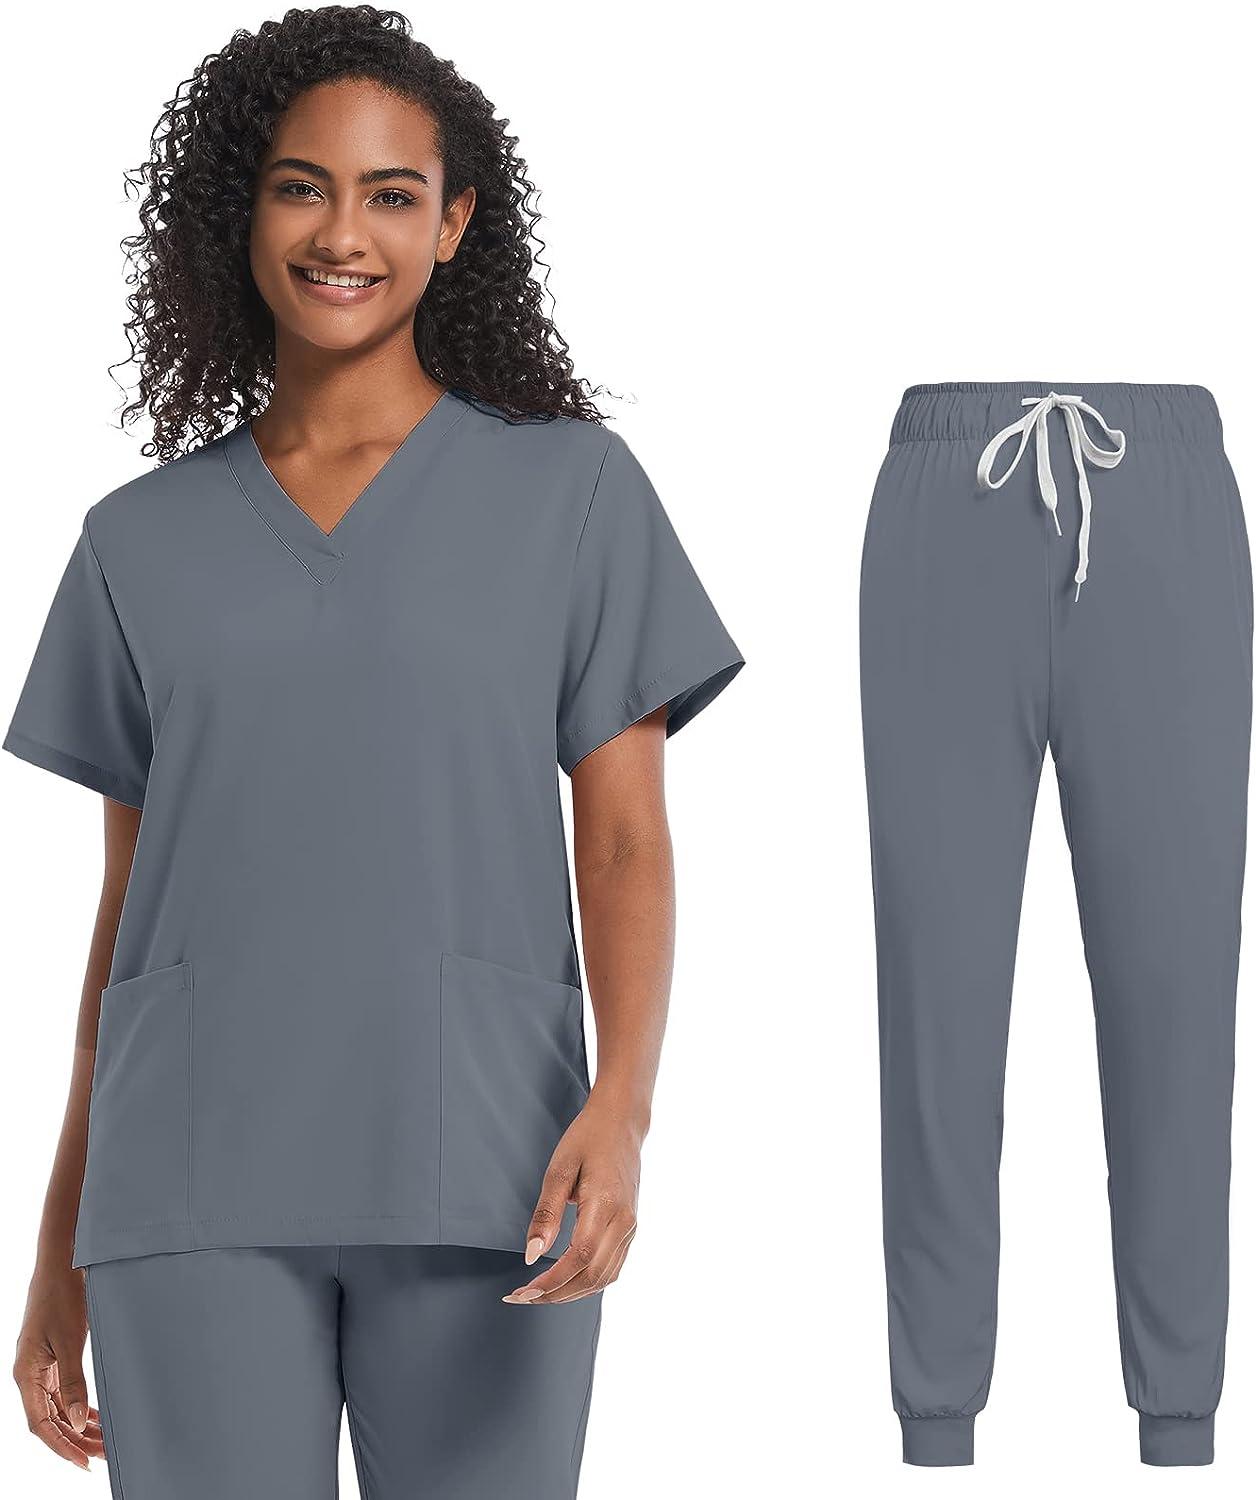 Scrubs Set for Women Joggers V-Neck Pocket Top Uniforms Athletic Stretch Set  Workwear Drawstring Threaded Pant Legs Grey Small